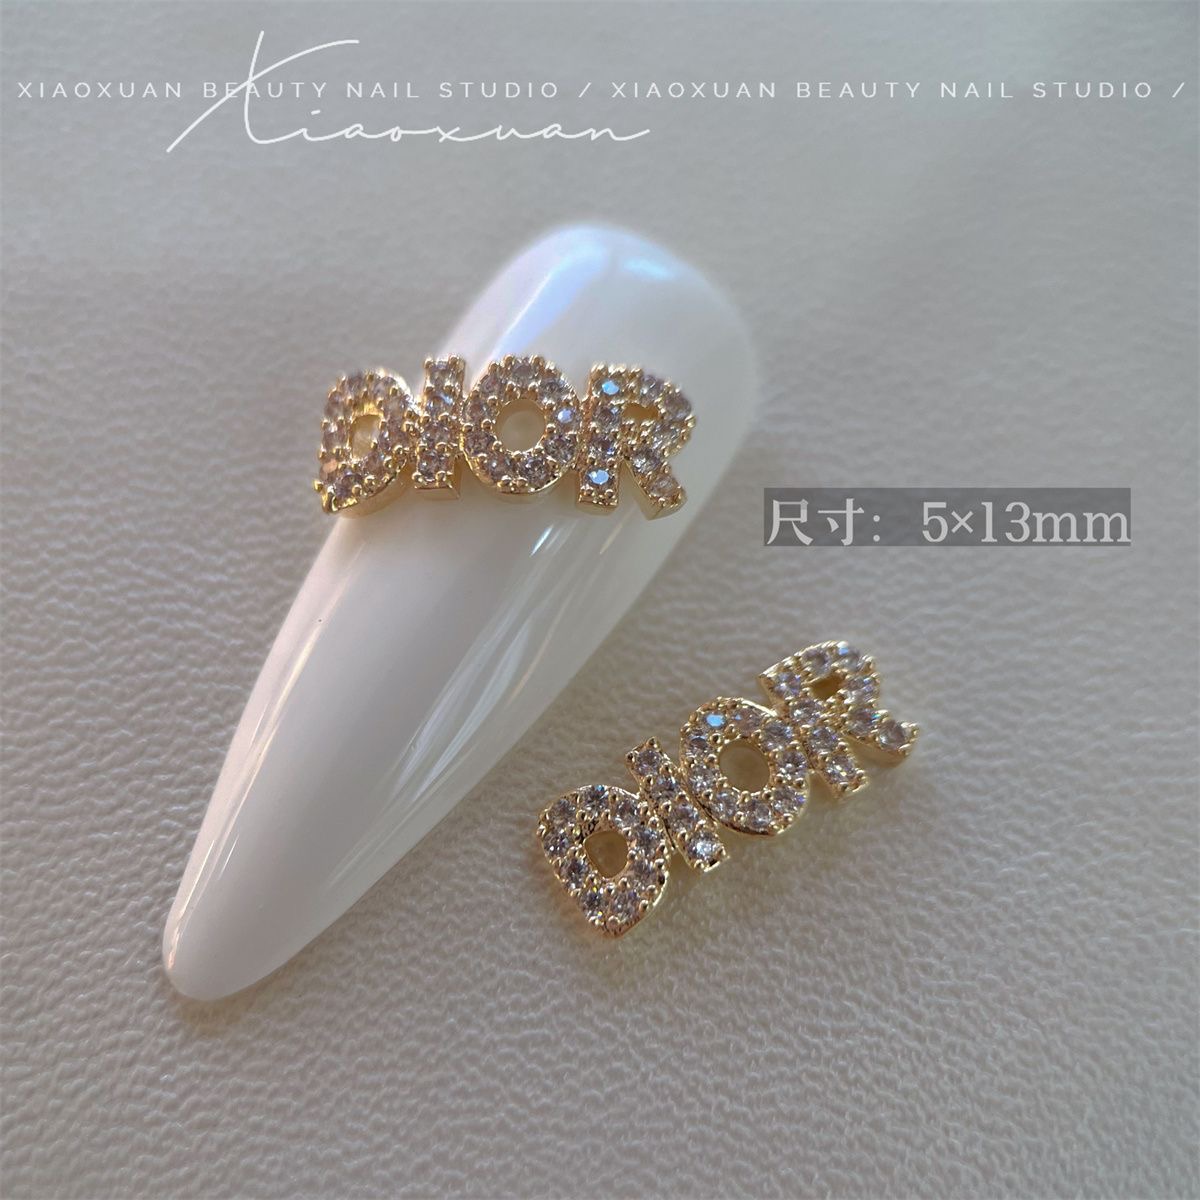 Dior nail charm gold